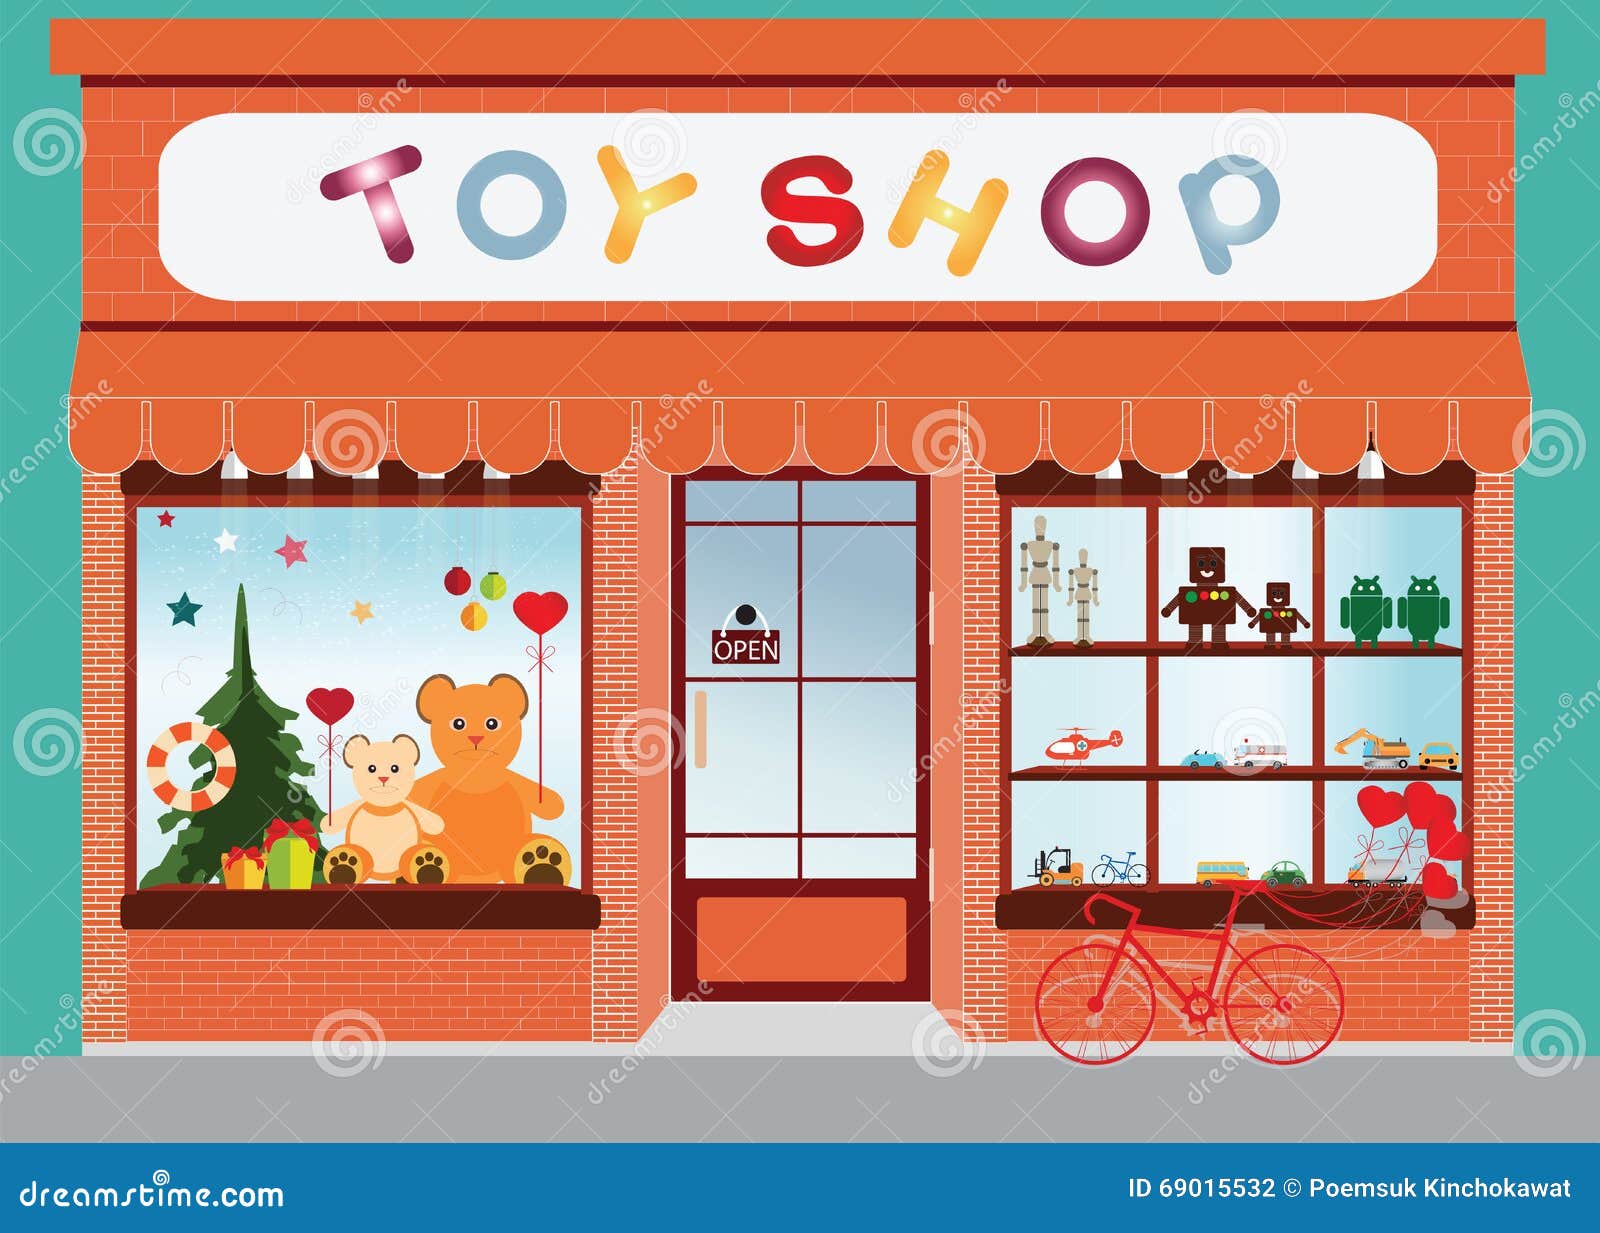 toy shop window display.